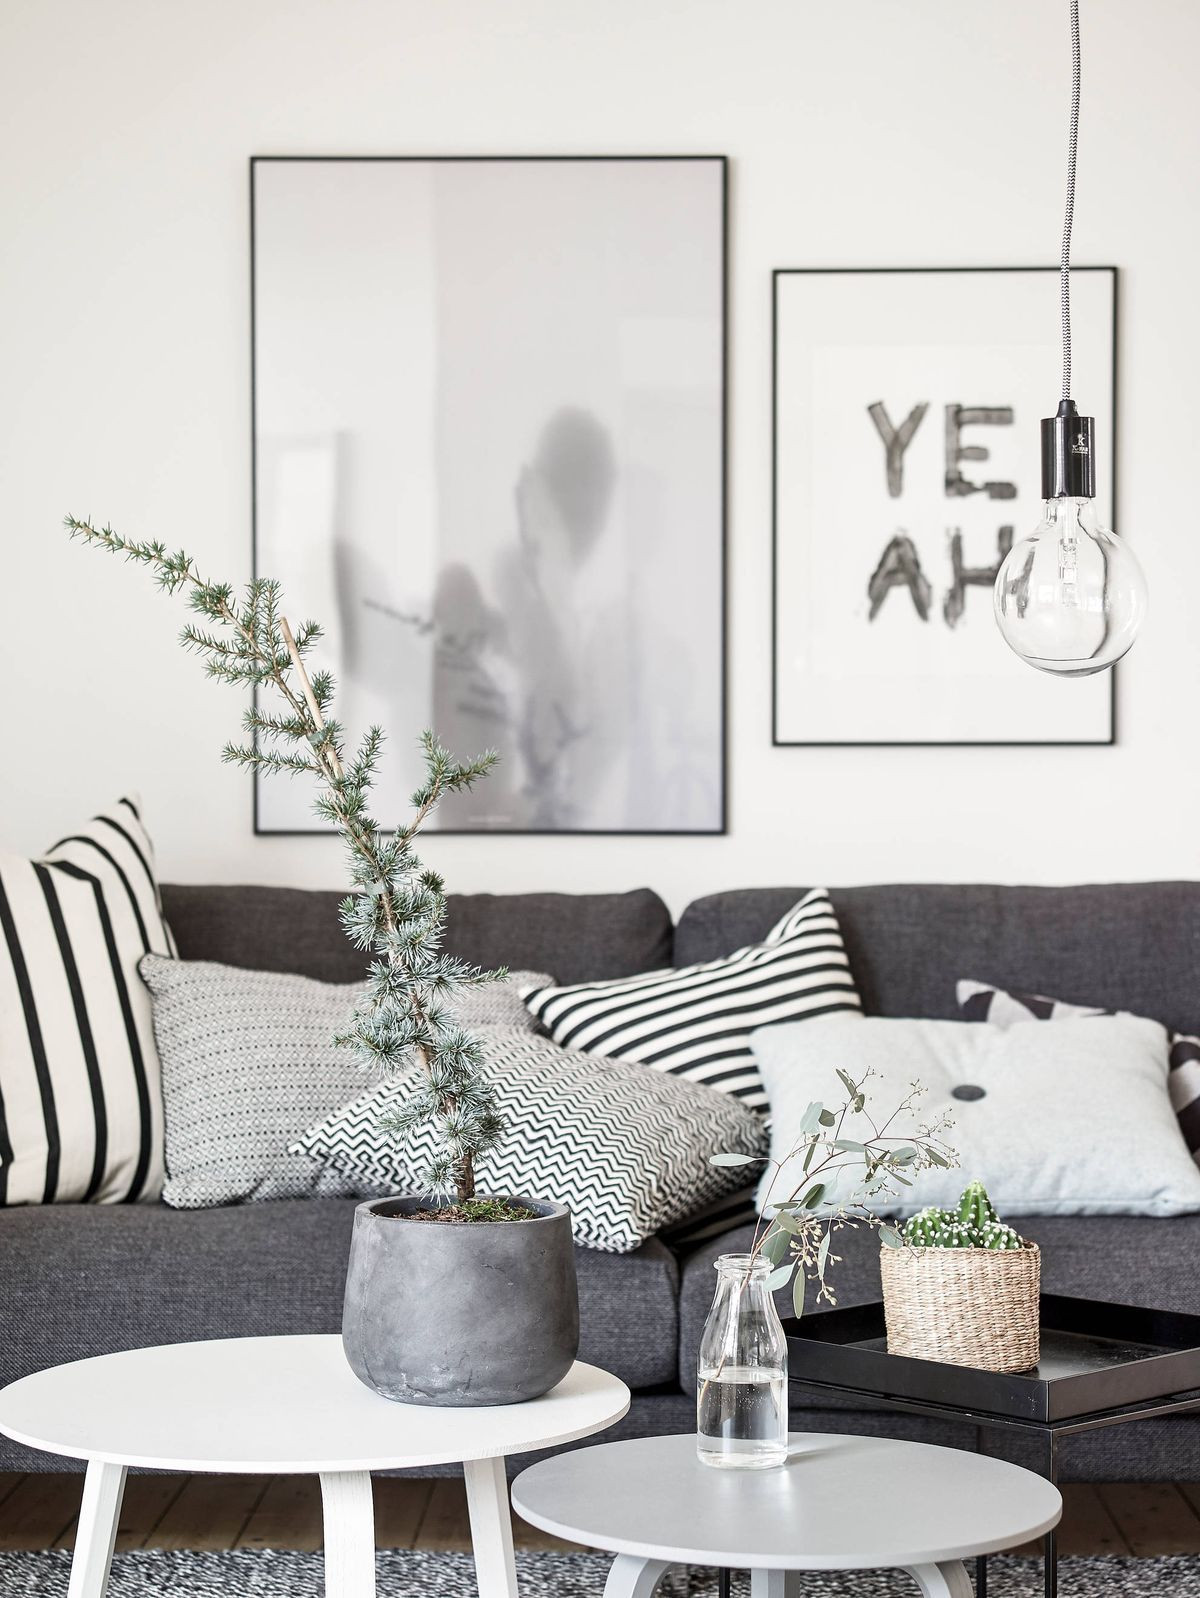 Best ideas about Scandinavian Living Room
. Save or Pin 10 Tips For The Best Scandinavian Living Room Decor Now.